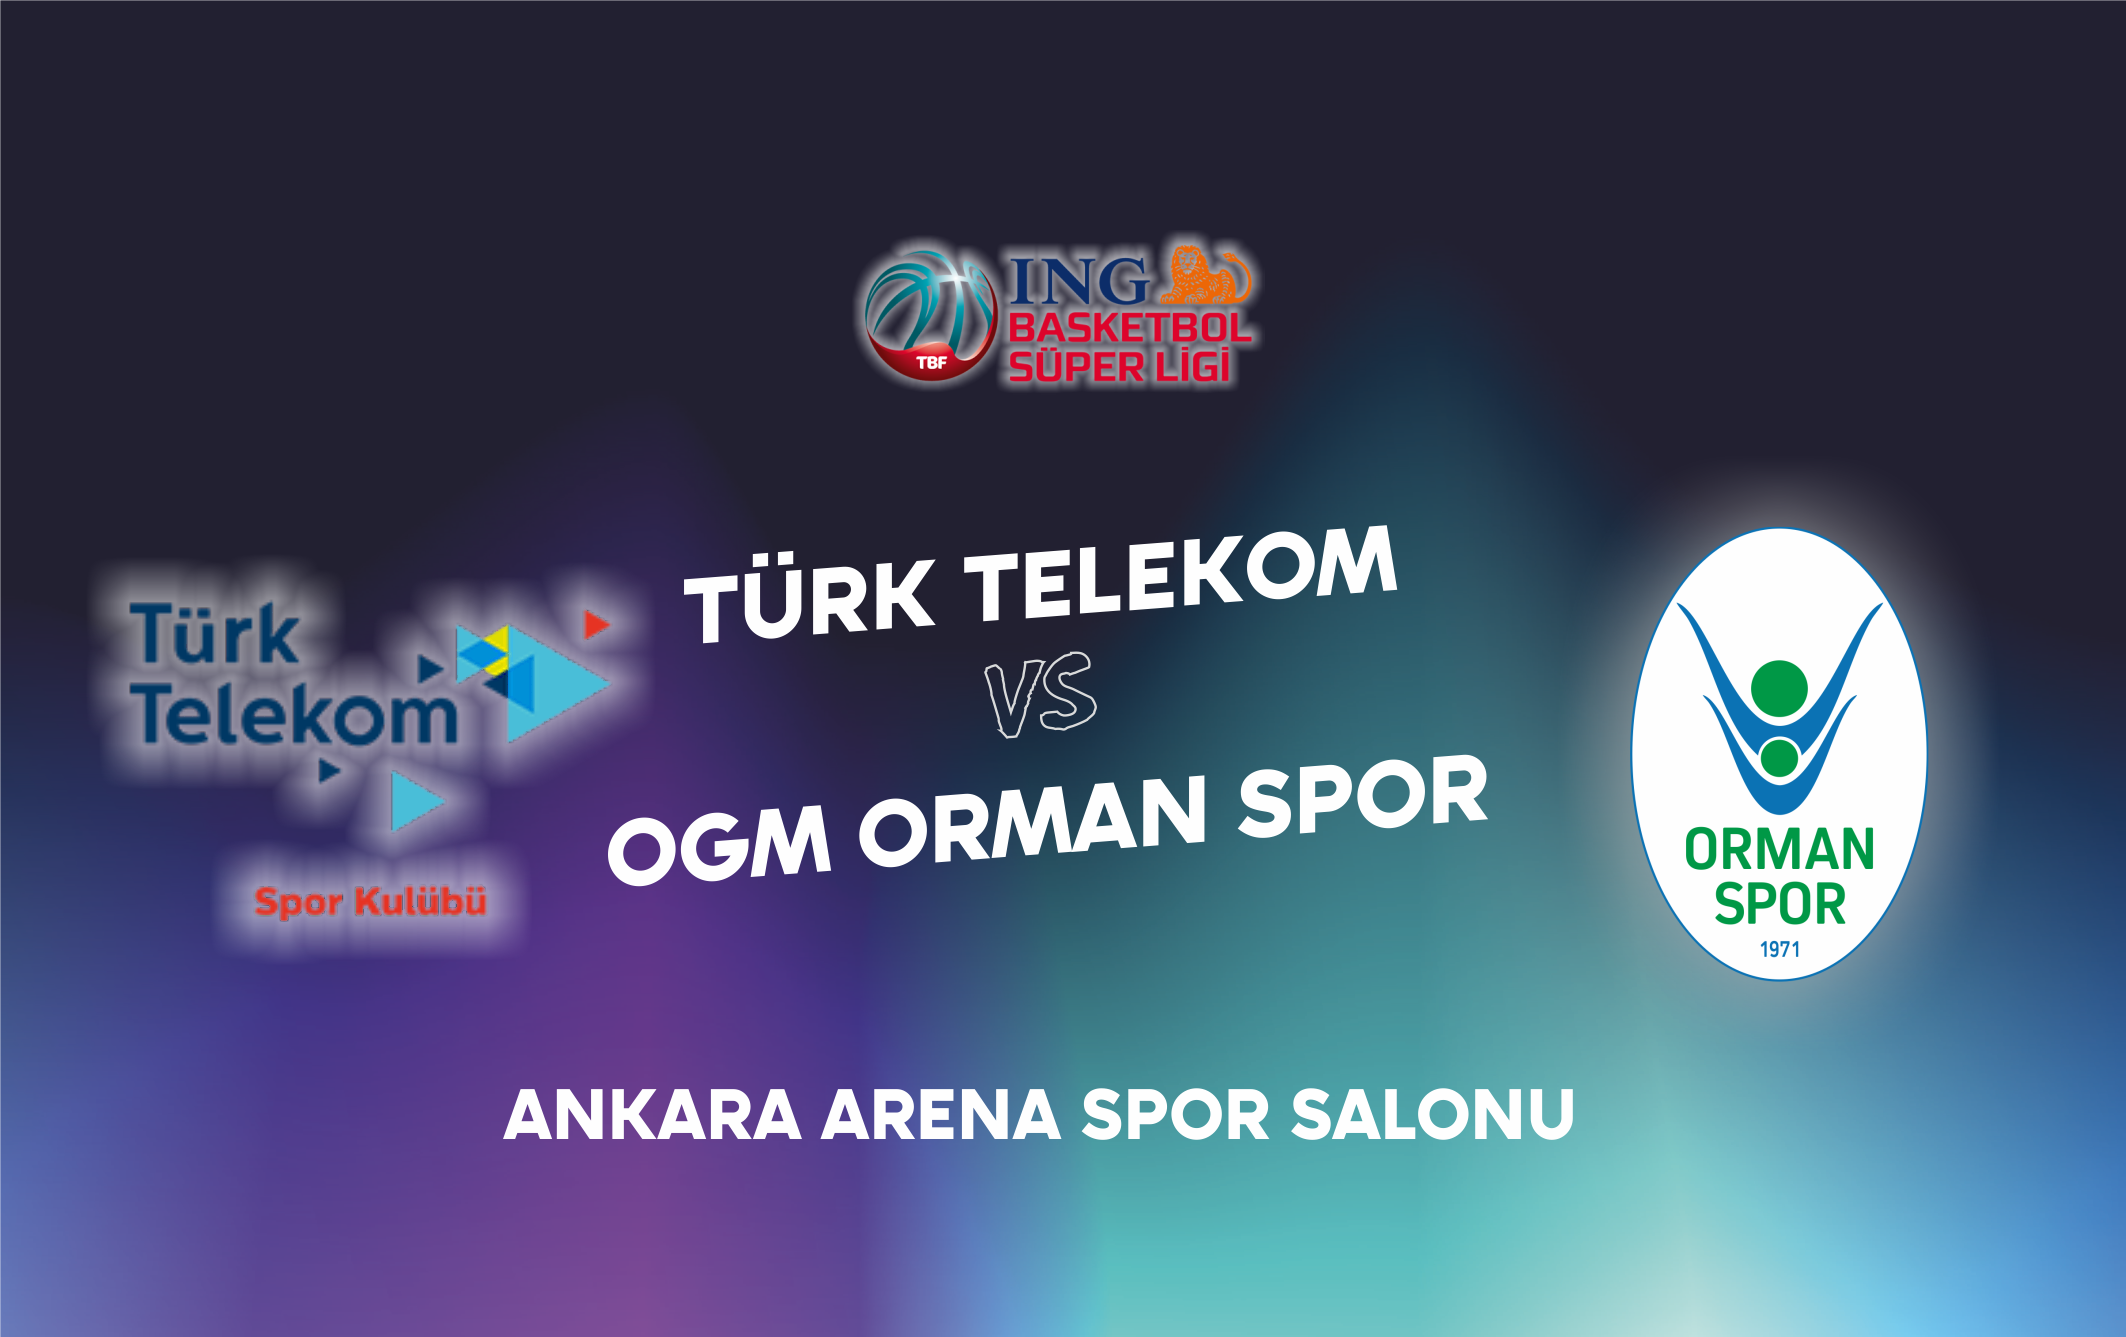 Türk Telekom 66-76 OGM Ormanspor - 7. Hafta